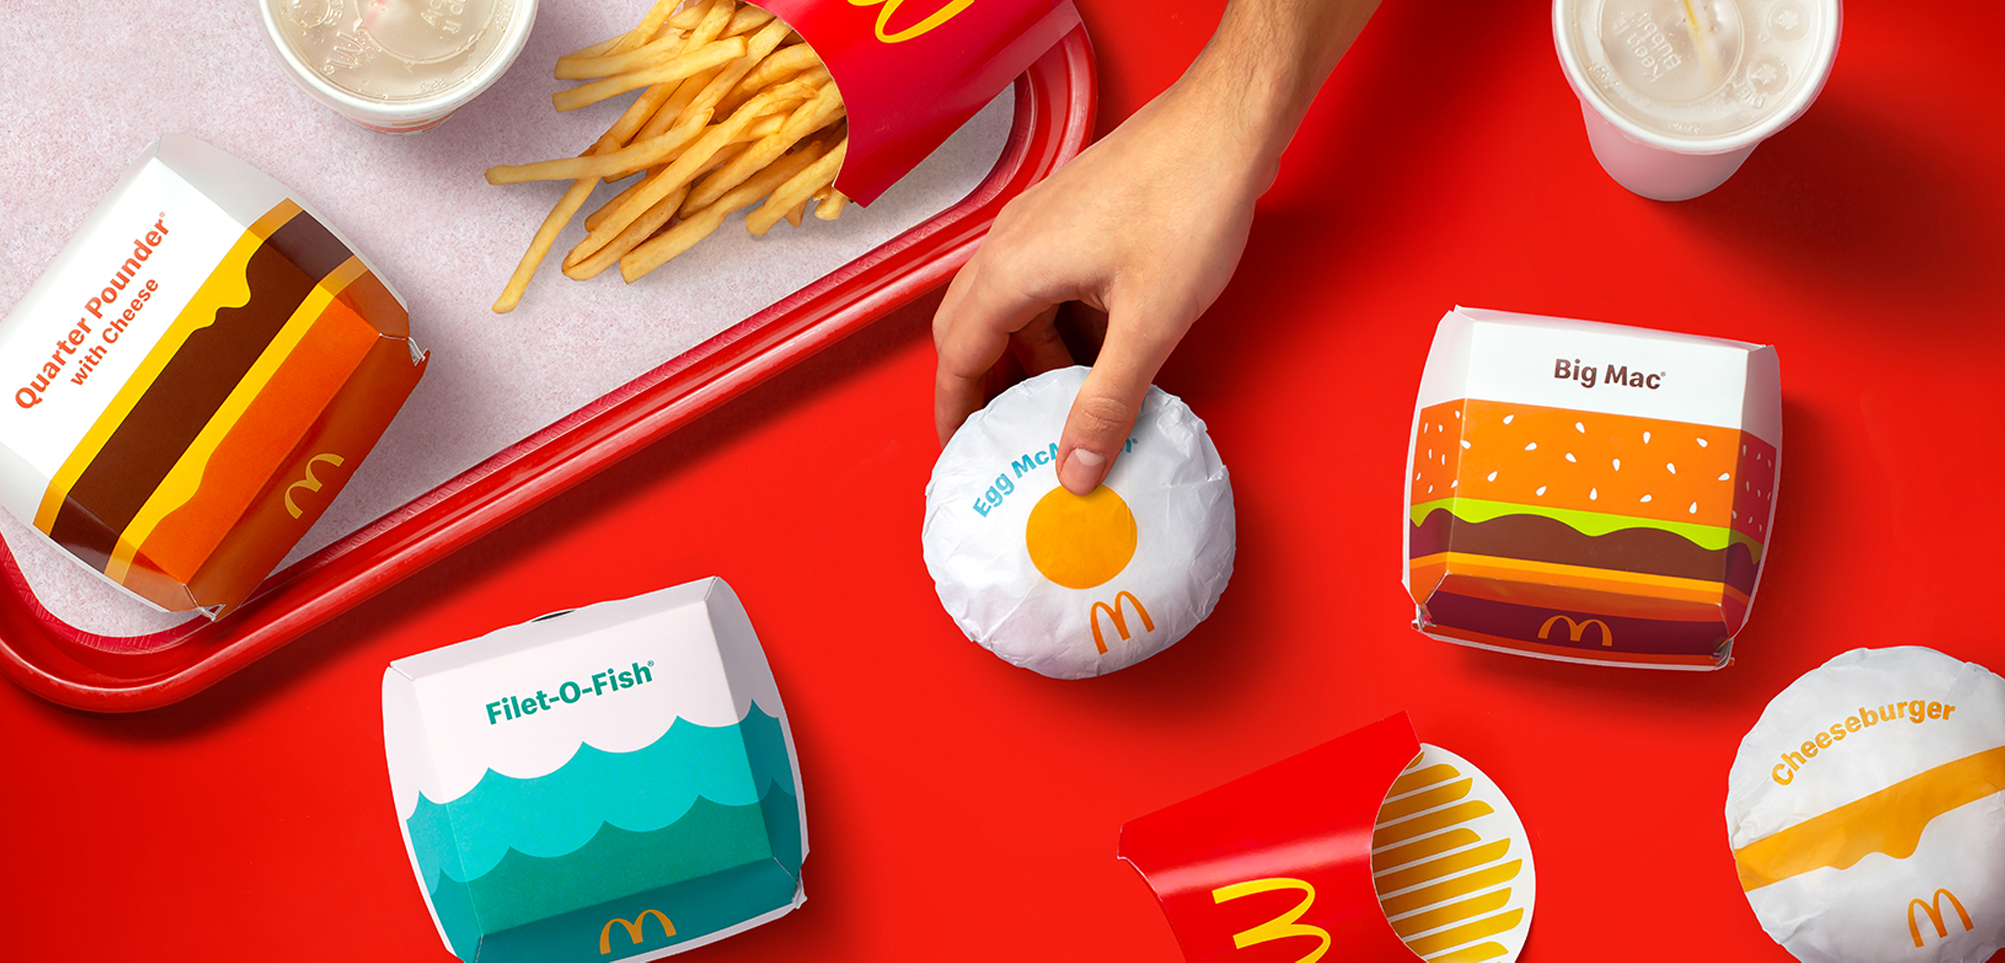 Redesign - McDonalds